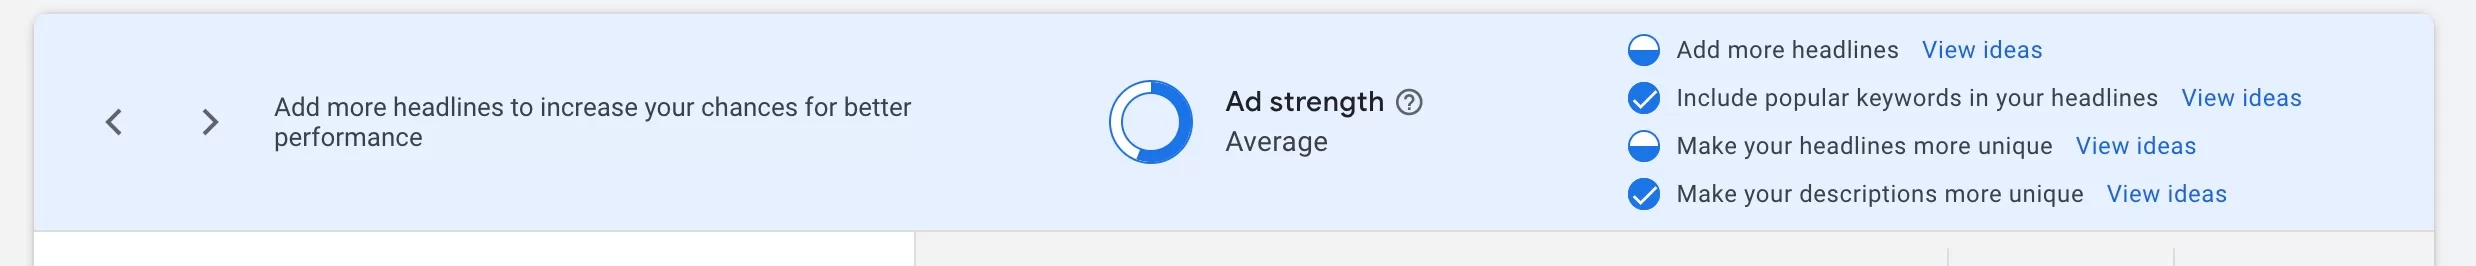 ad strength indicator